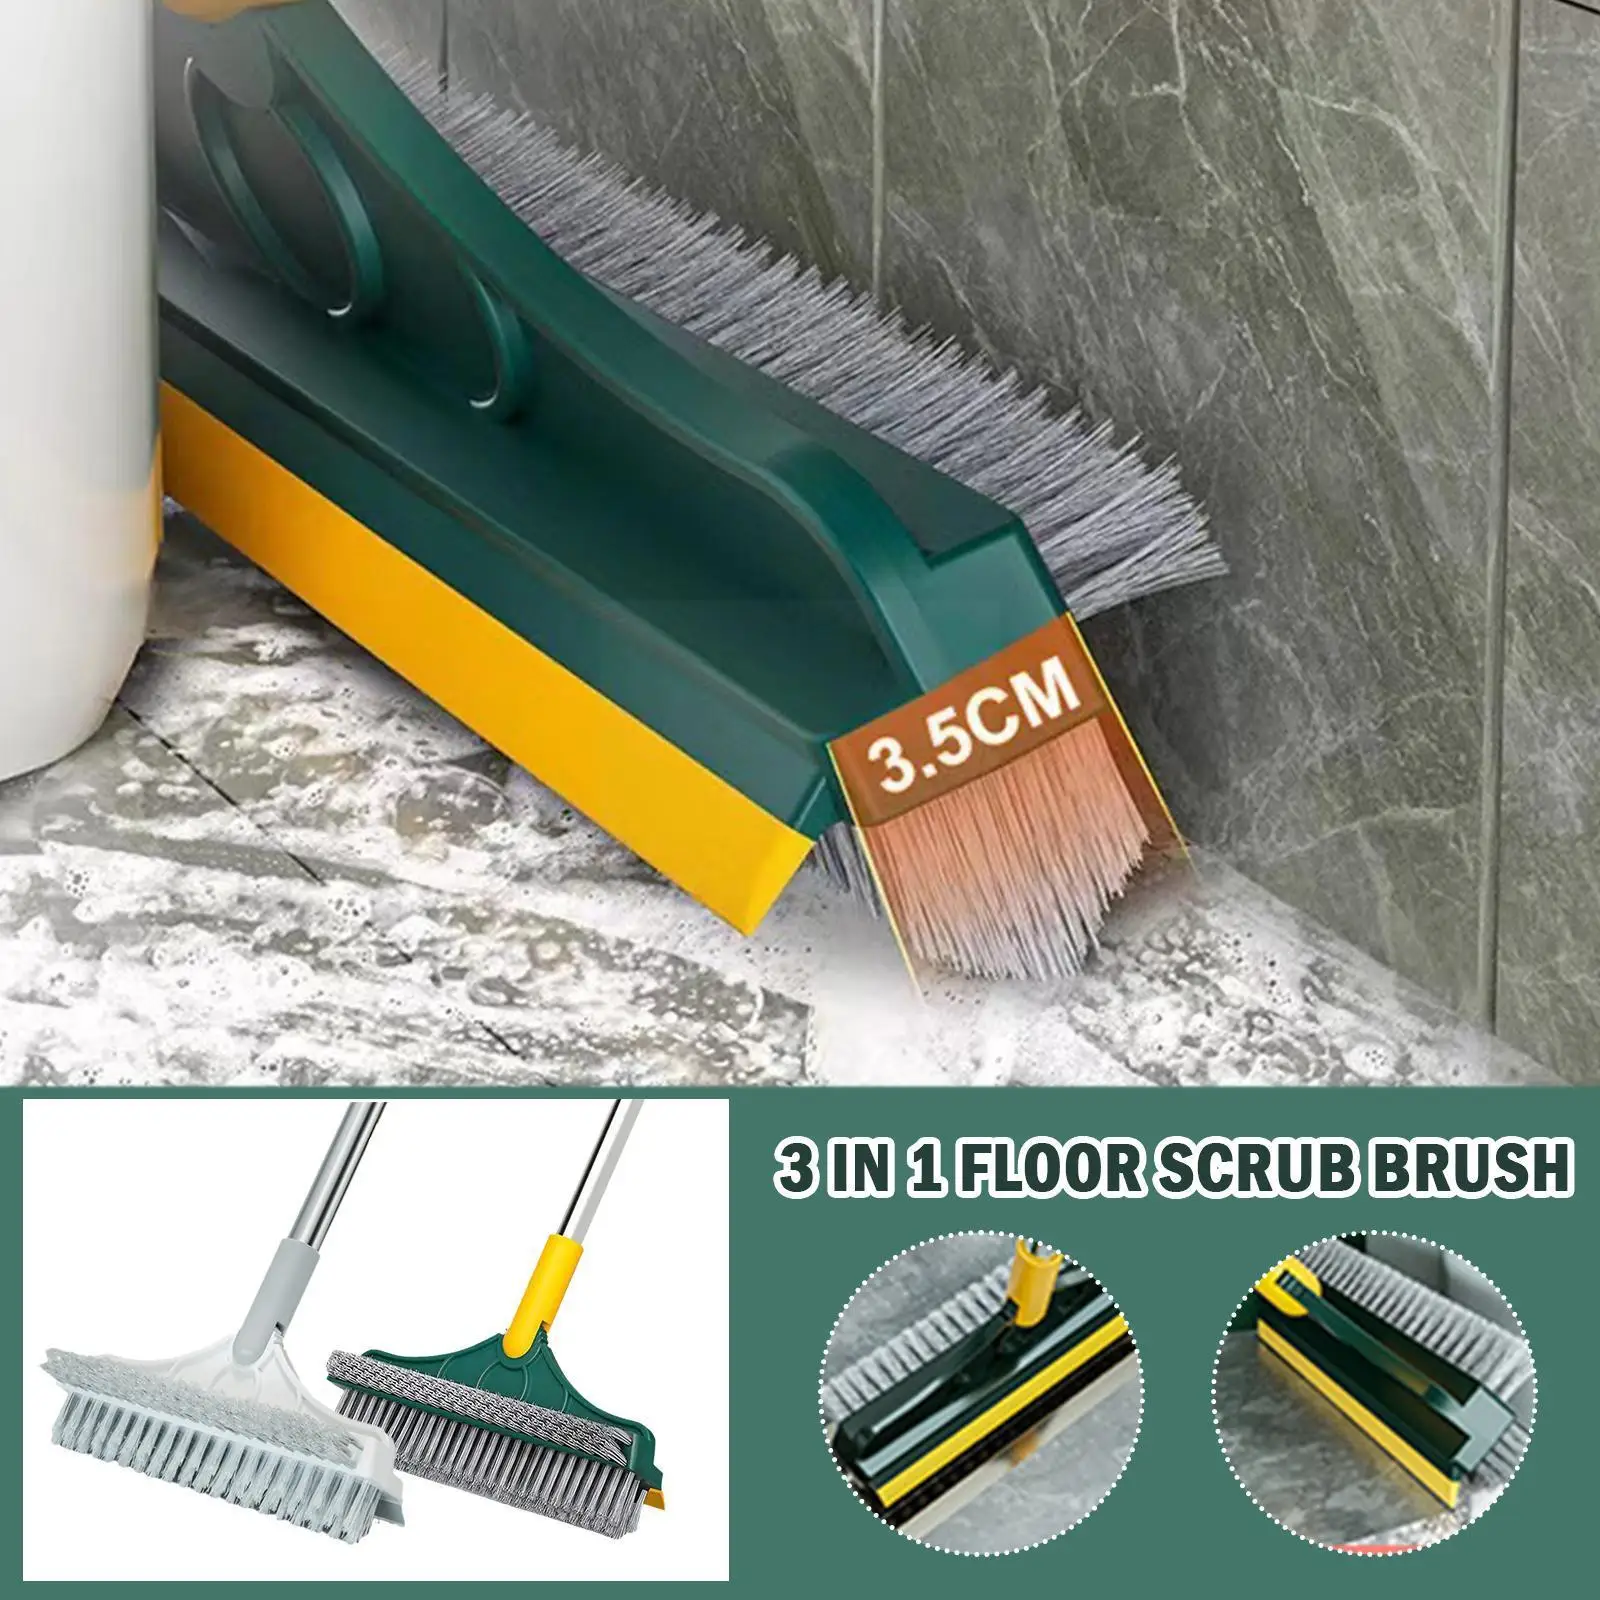 https://ae01.alicdn.com/kf/S03703f5be5544bbf888271a446529b8be/3-In-1-Floor-Scrub-Brush-Floor-Brush-Scrubber-With-Kitchen-Bathroom-Brush-Cleaning-Handle-Rotating.jpg